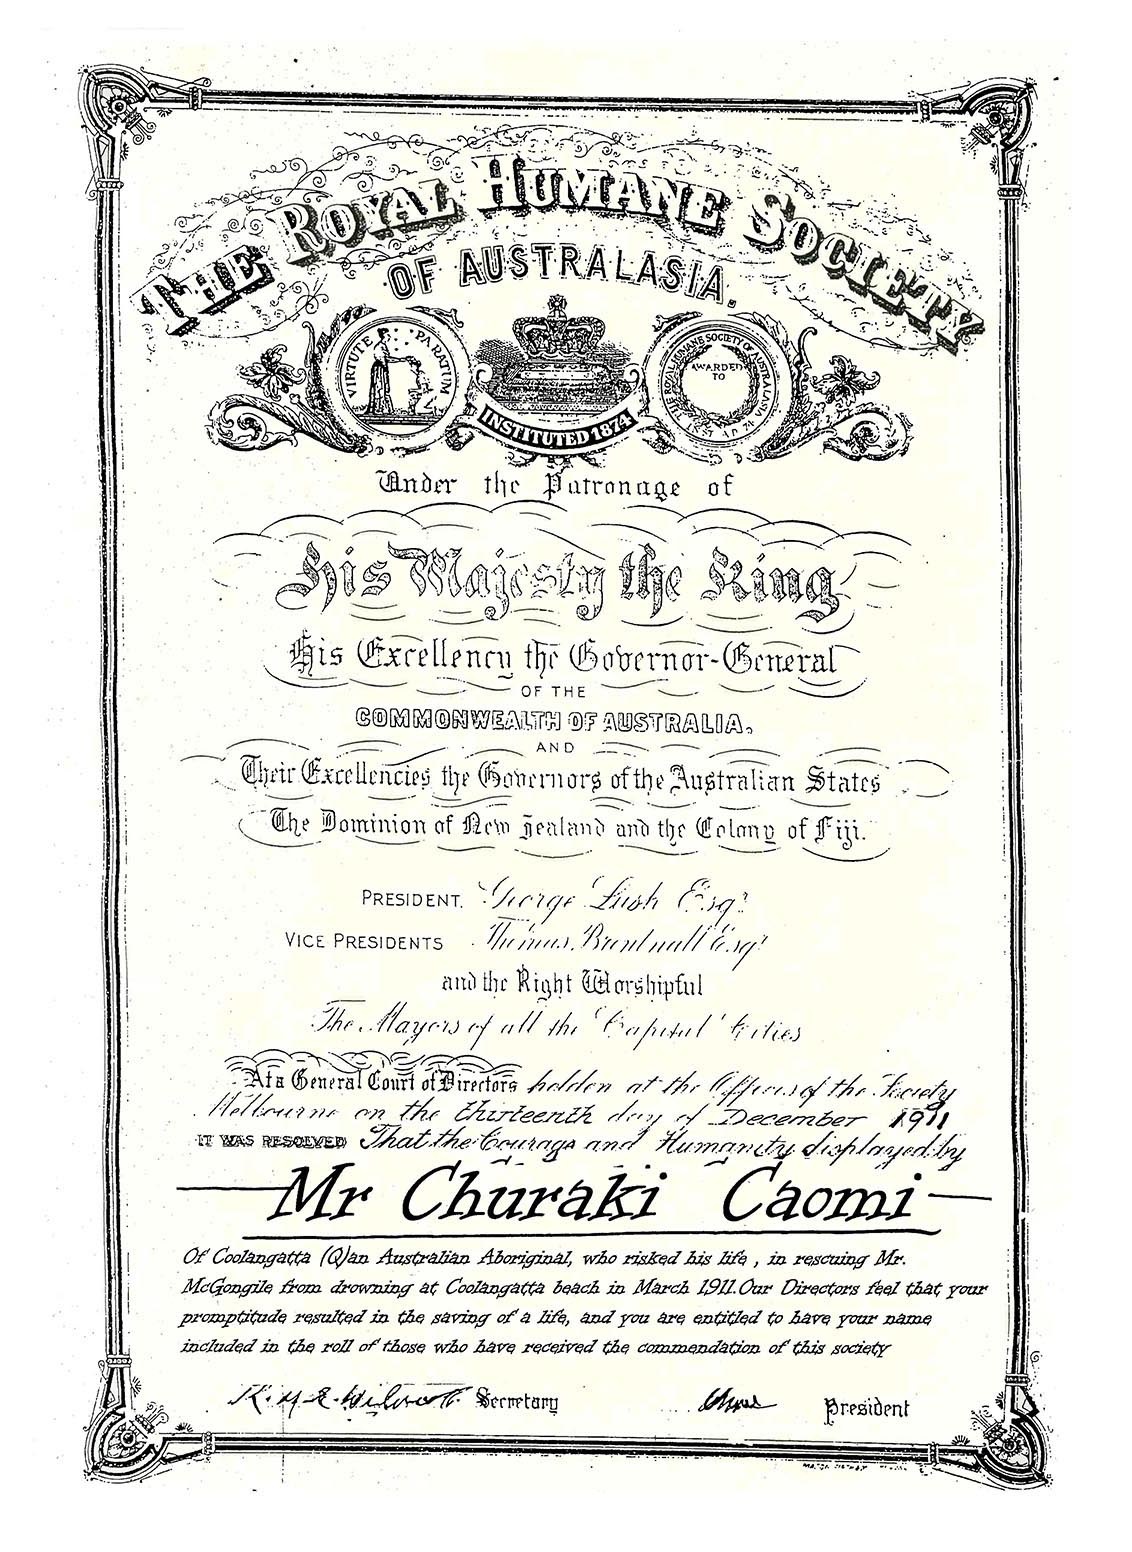 Churaki's certificate from the Royal Human Society of Australasia